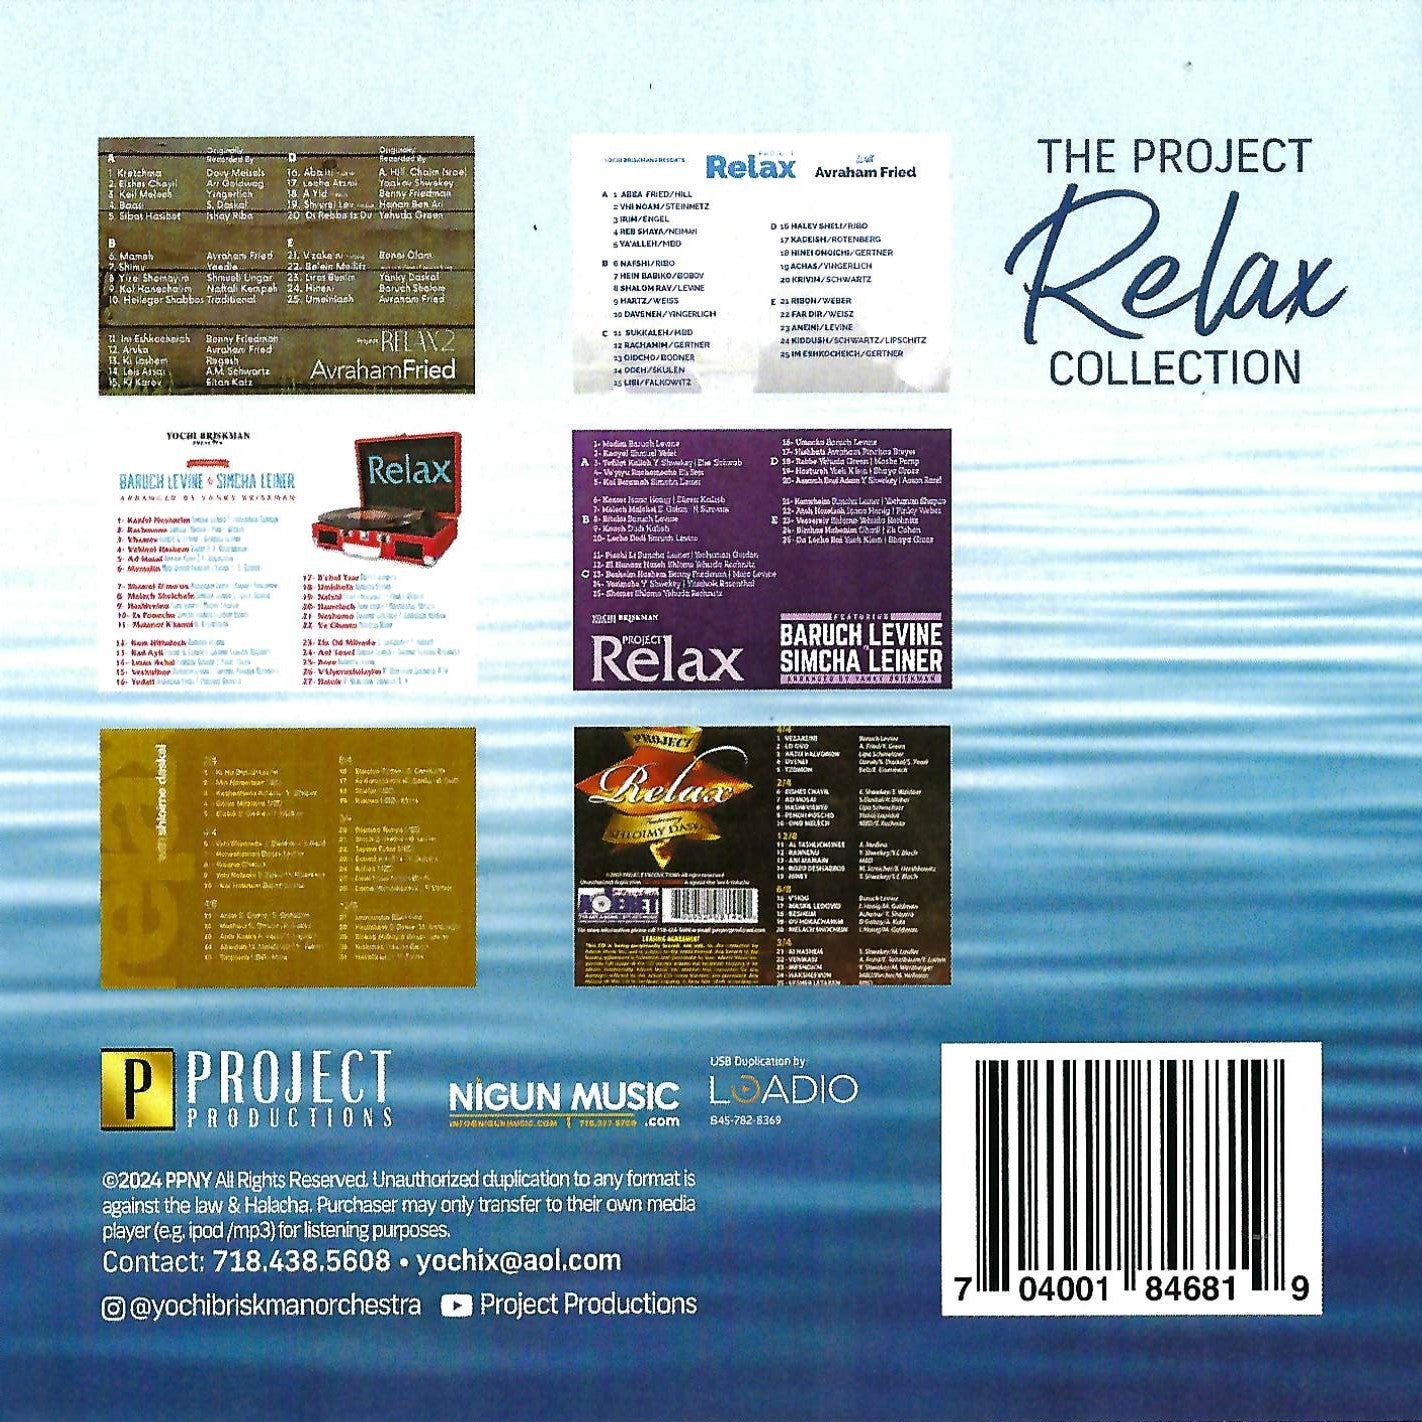 יוכי בריסקמן - The Project Relax Collection (USB)